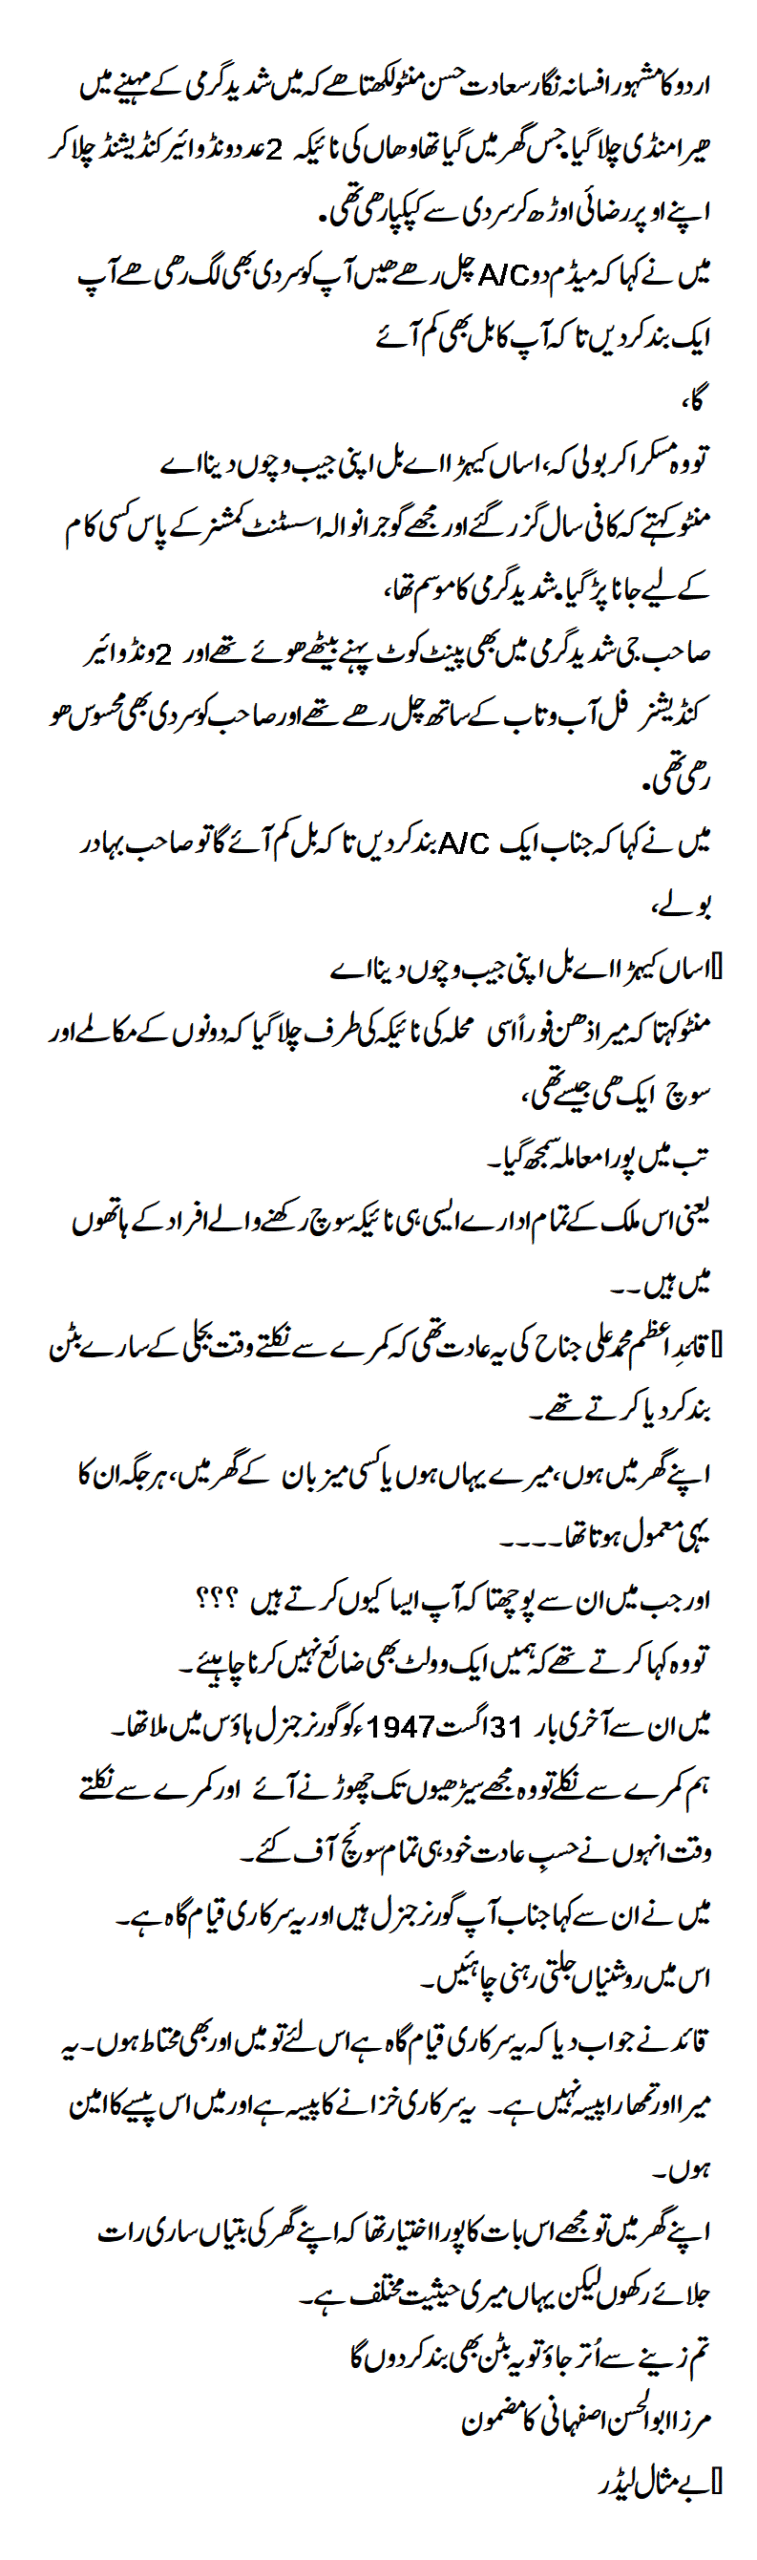 The famous Urdu novelist Saadat Hasan Manto writes